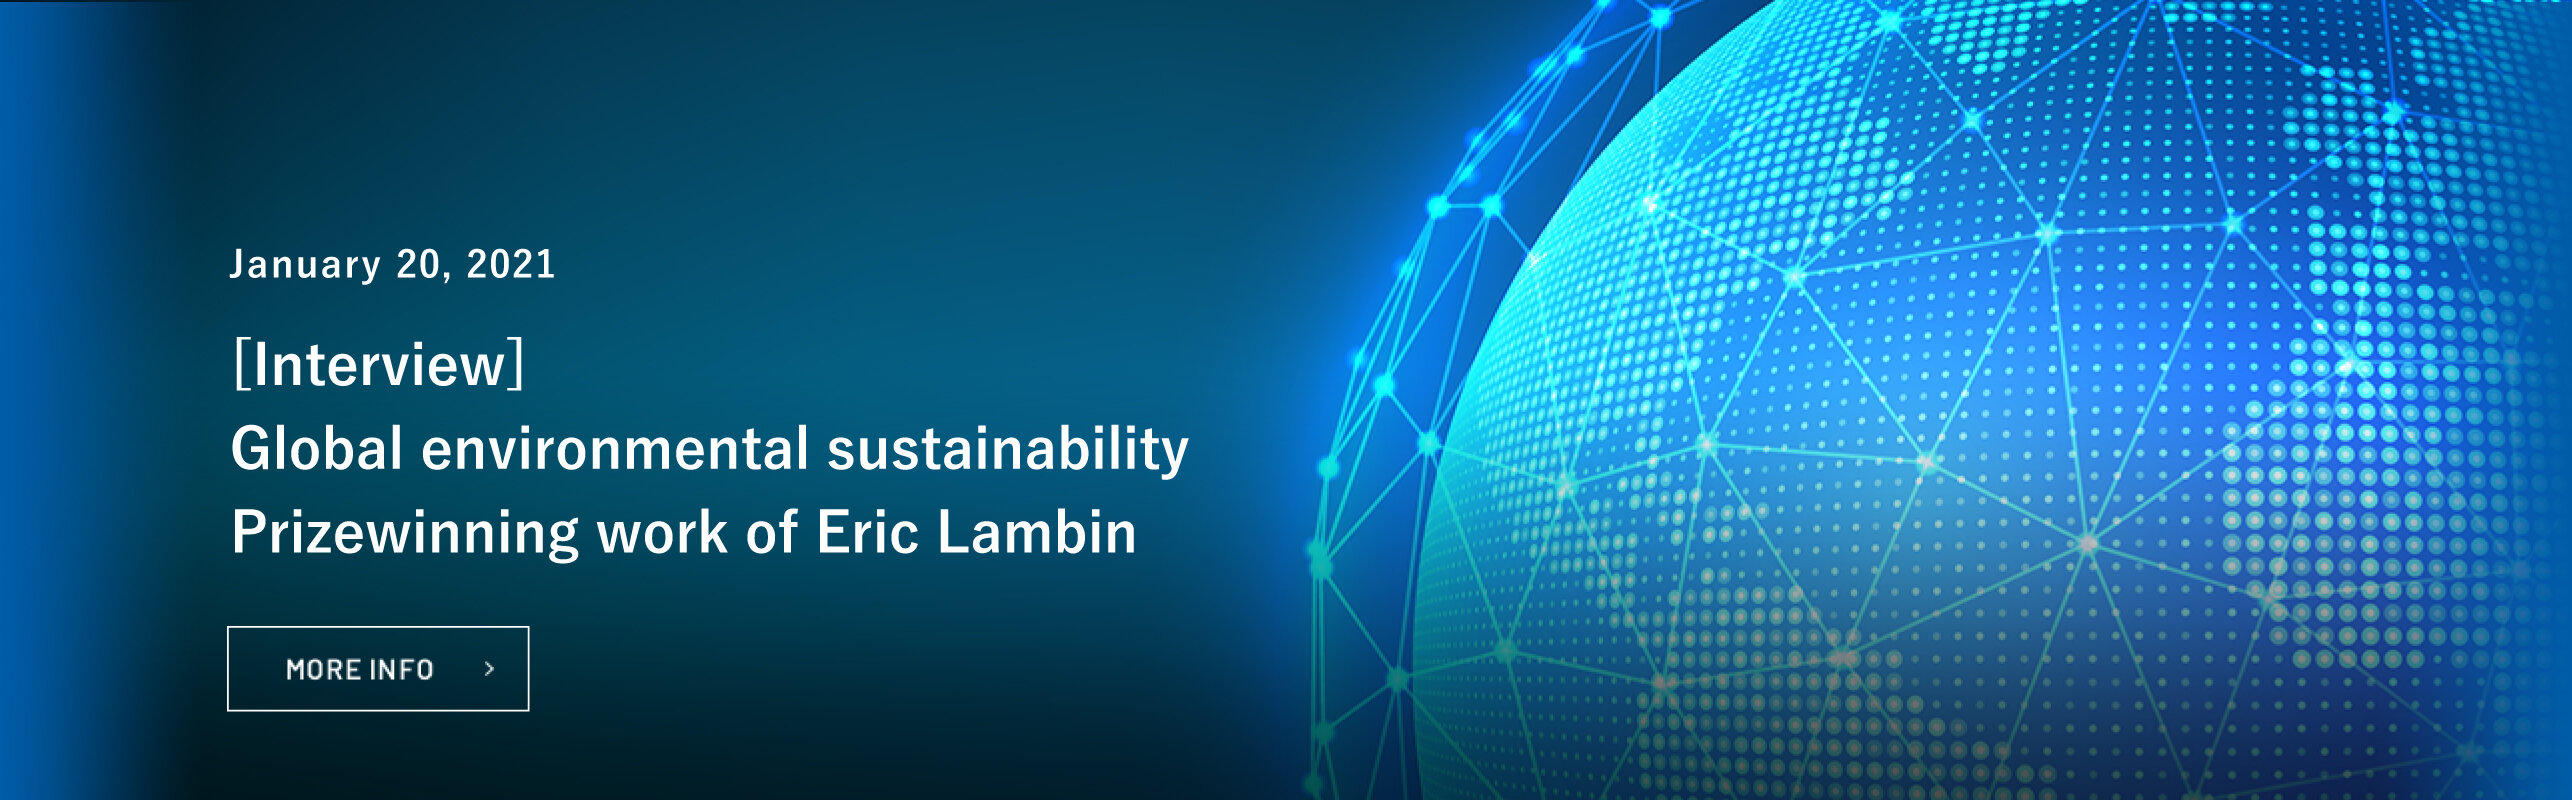 Global environmental sustainability - Prizewinning work of Eric Lambin